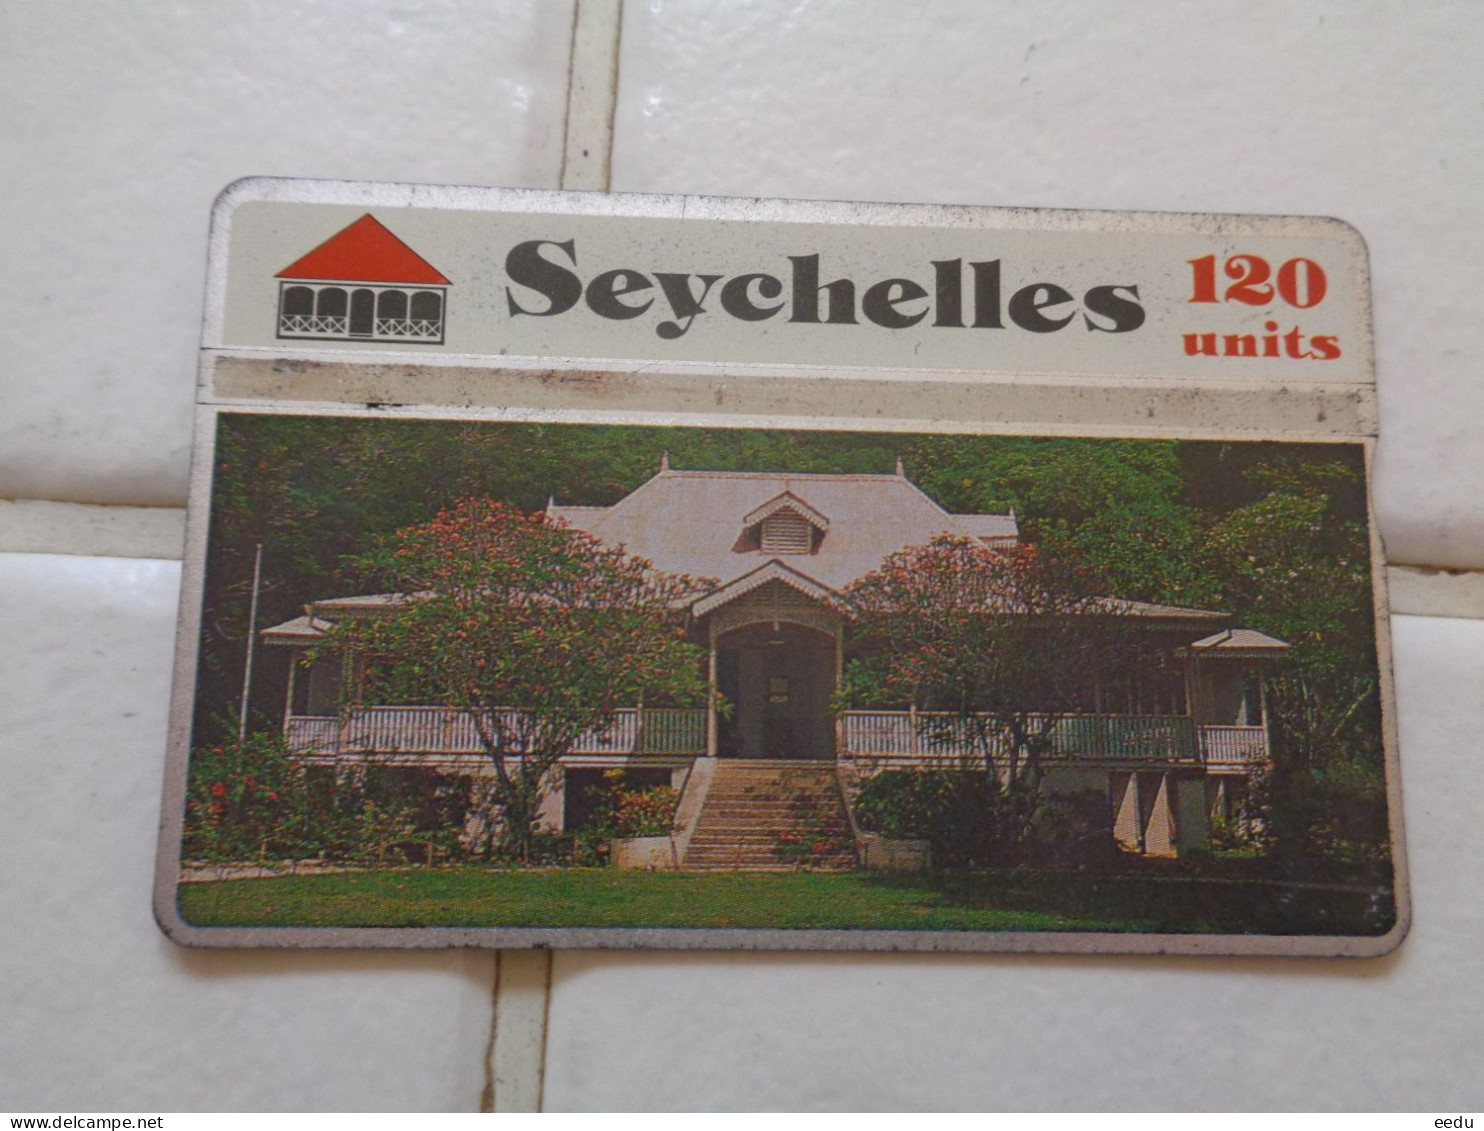 Seychelles Phonecard - Sychelles